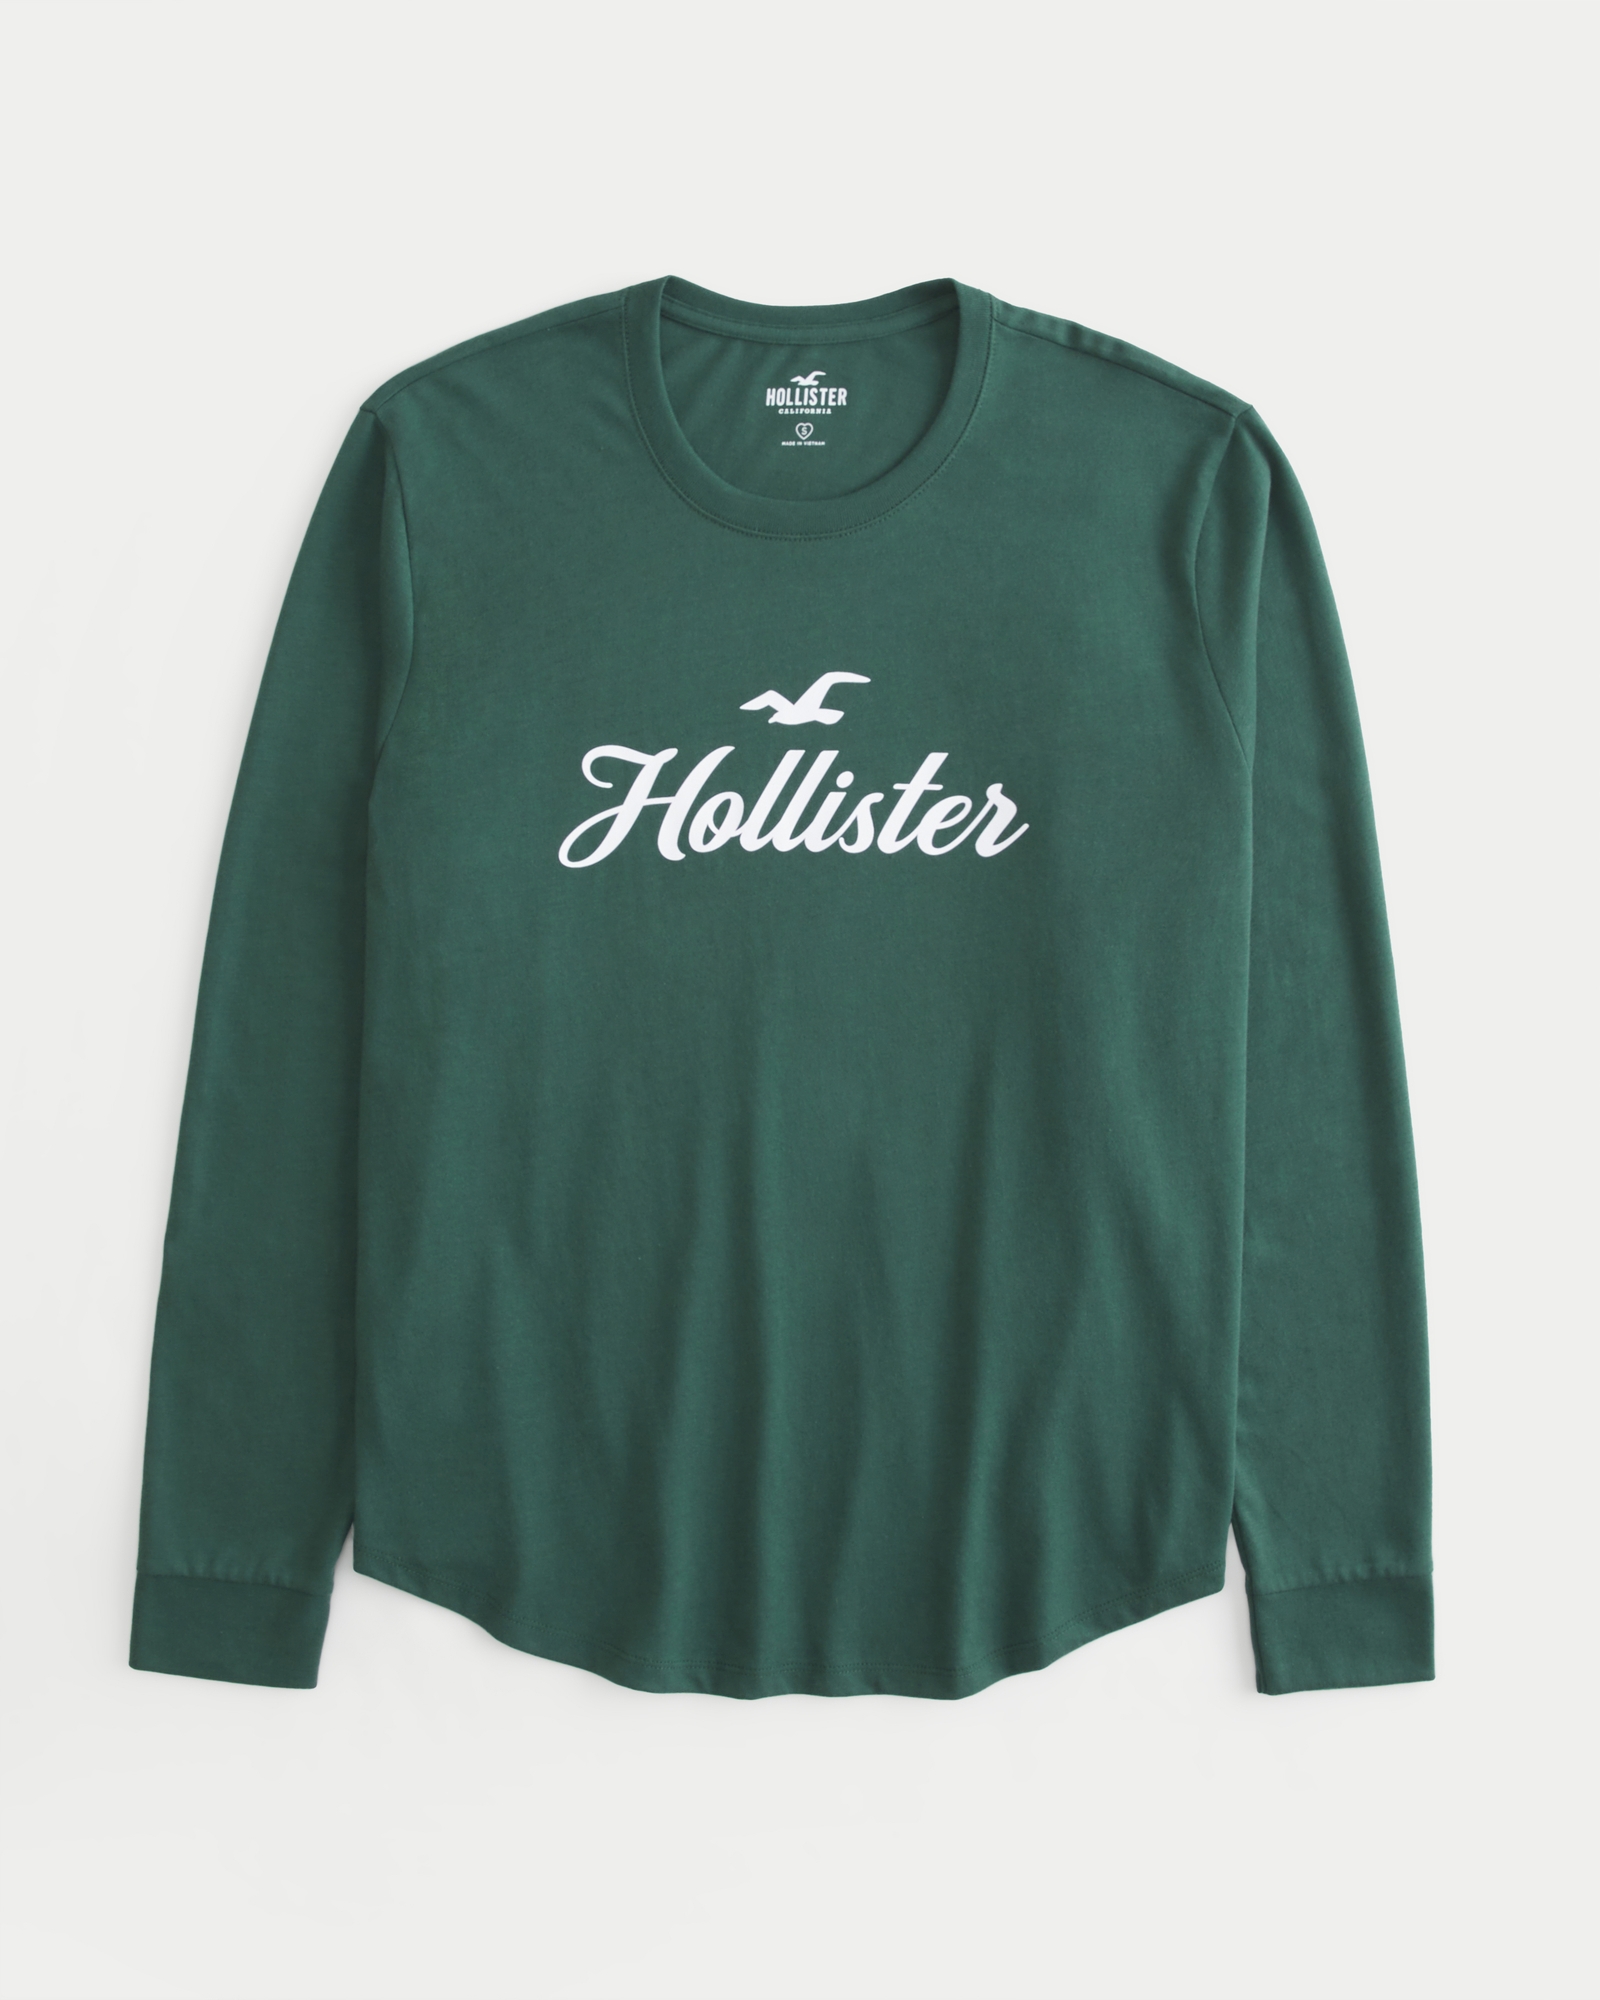 Hollister long sleeve women long sleeve T-shirt size S - $7 - From Chole